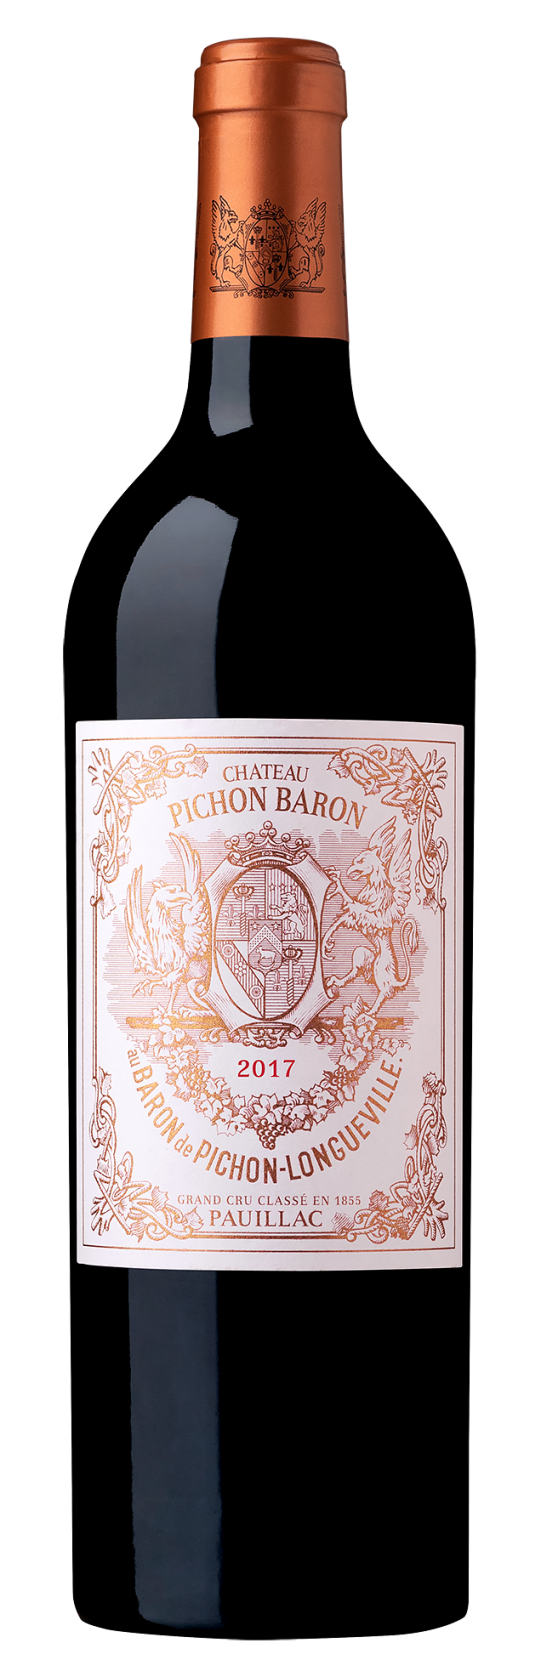 Chateau Pichon Baron Longueville 2019, Pauillac